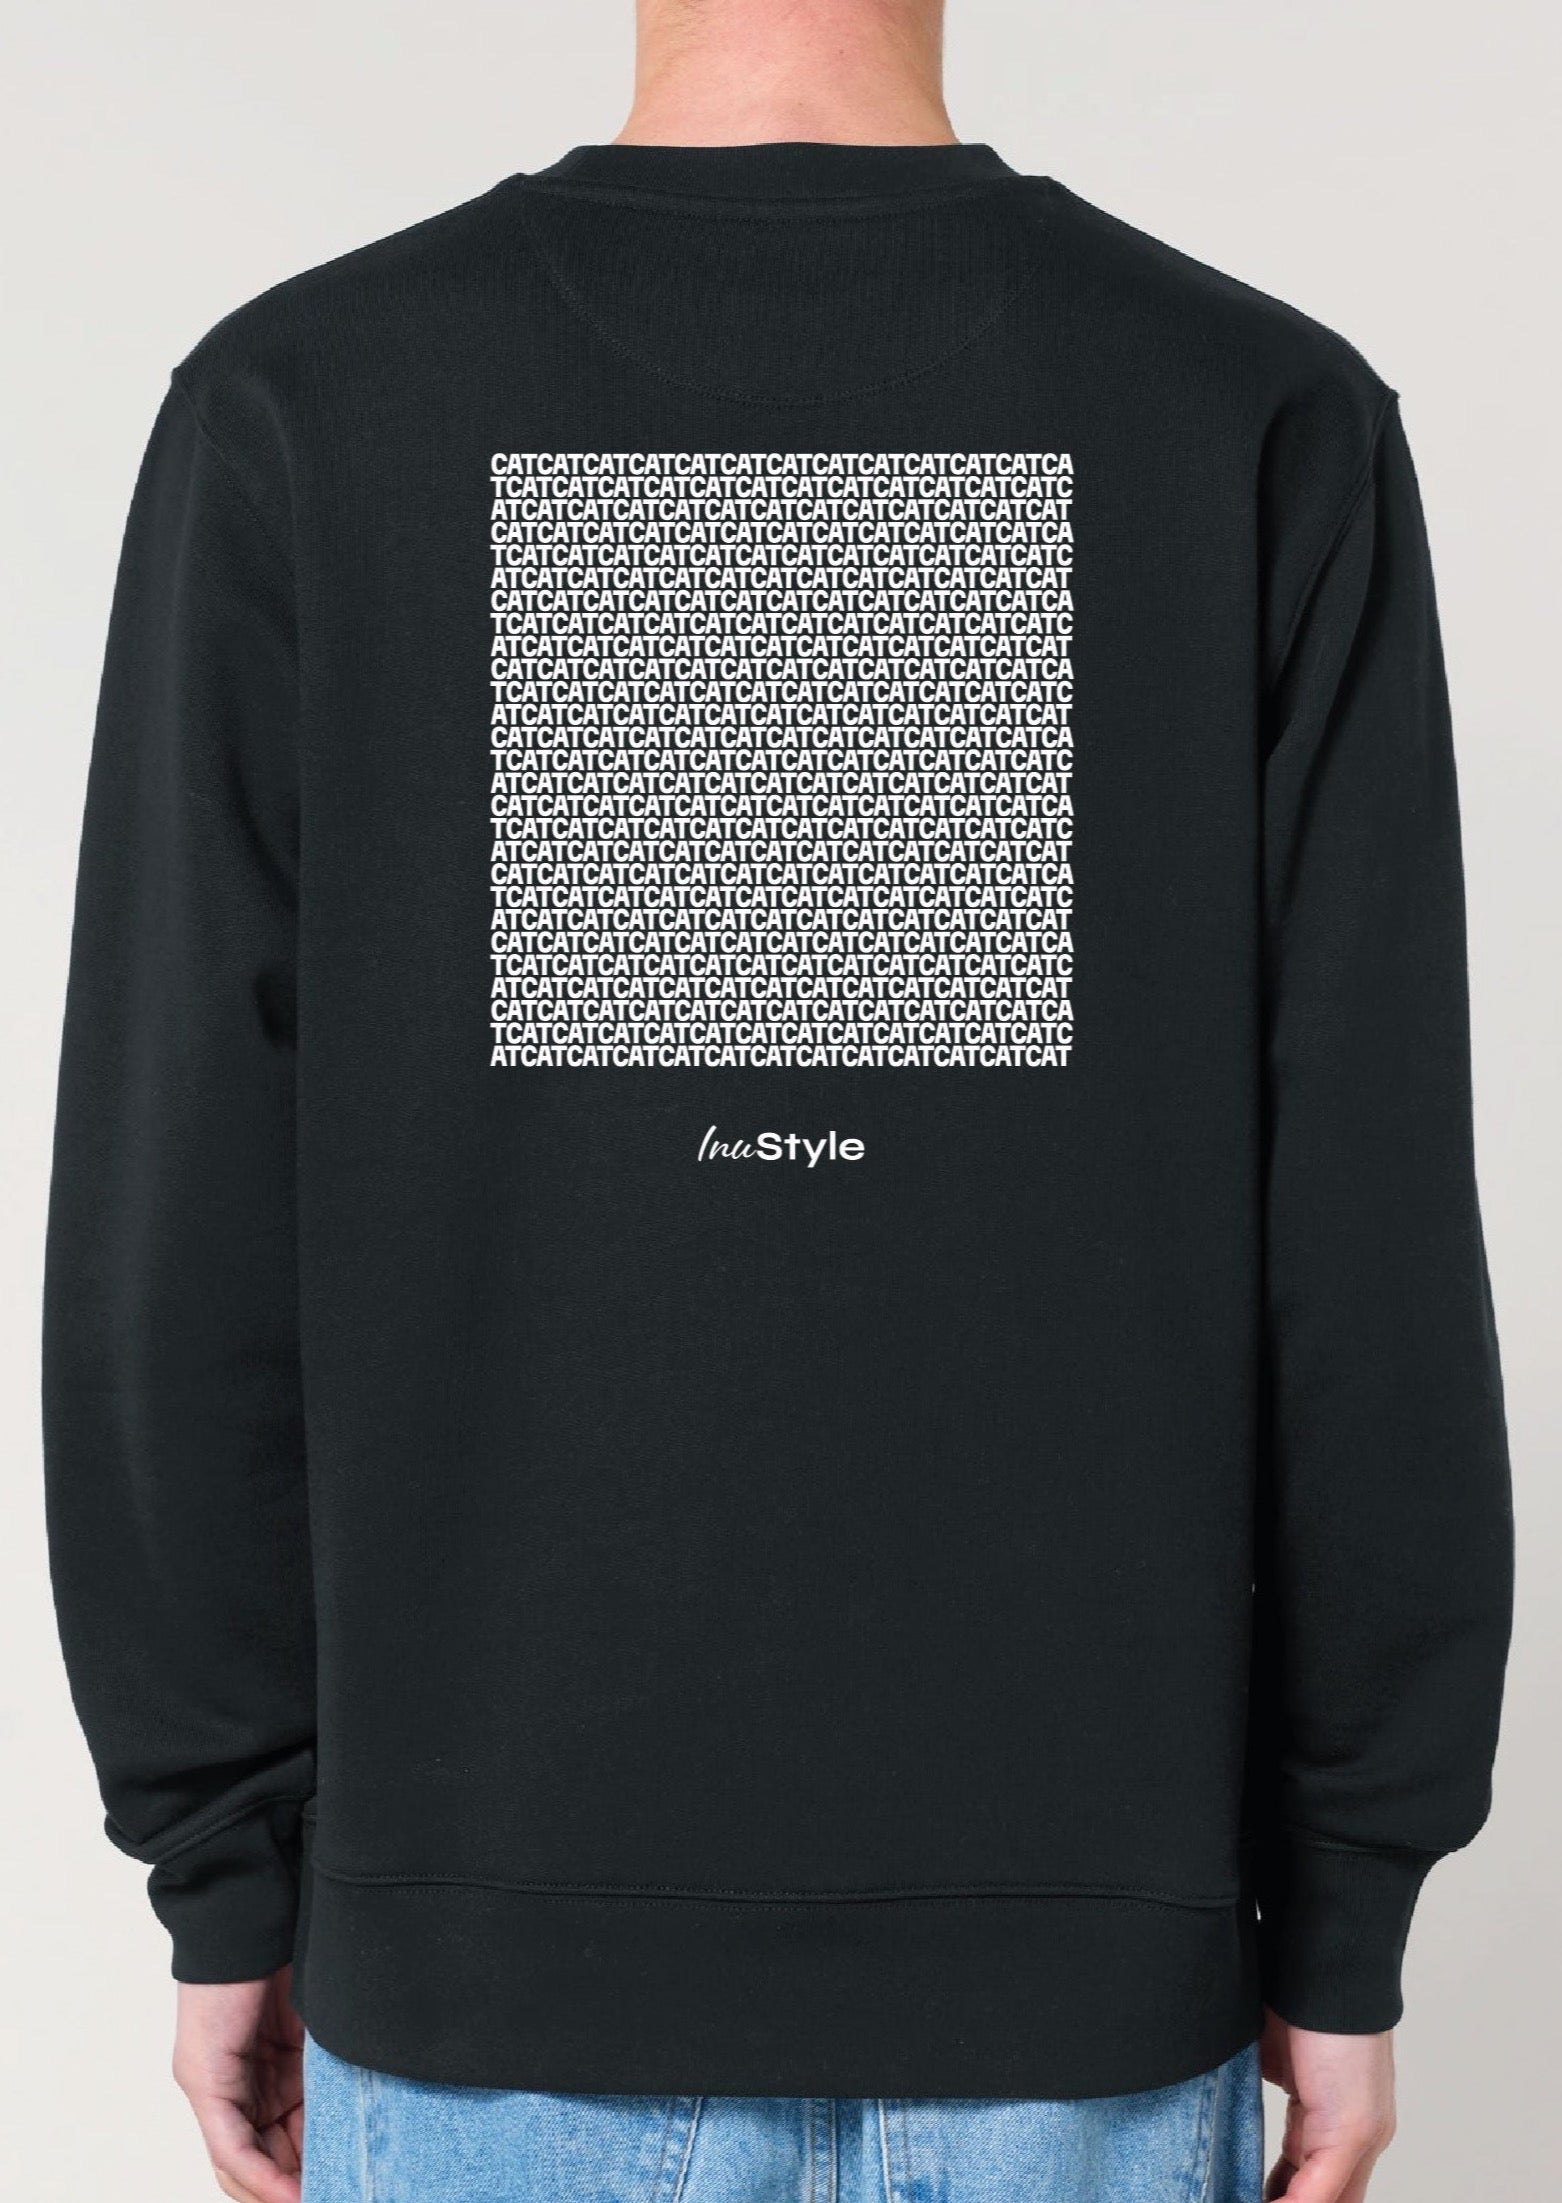 New Inu.style Collection - CAAT - Sweatshirt